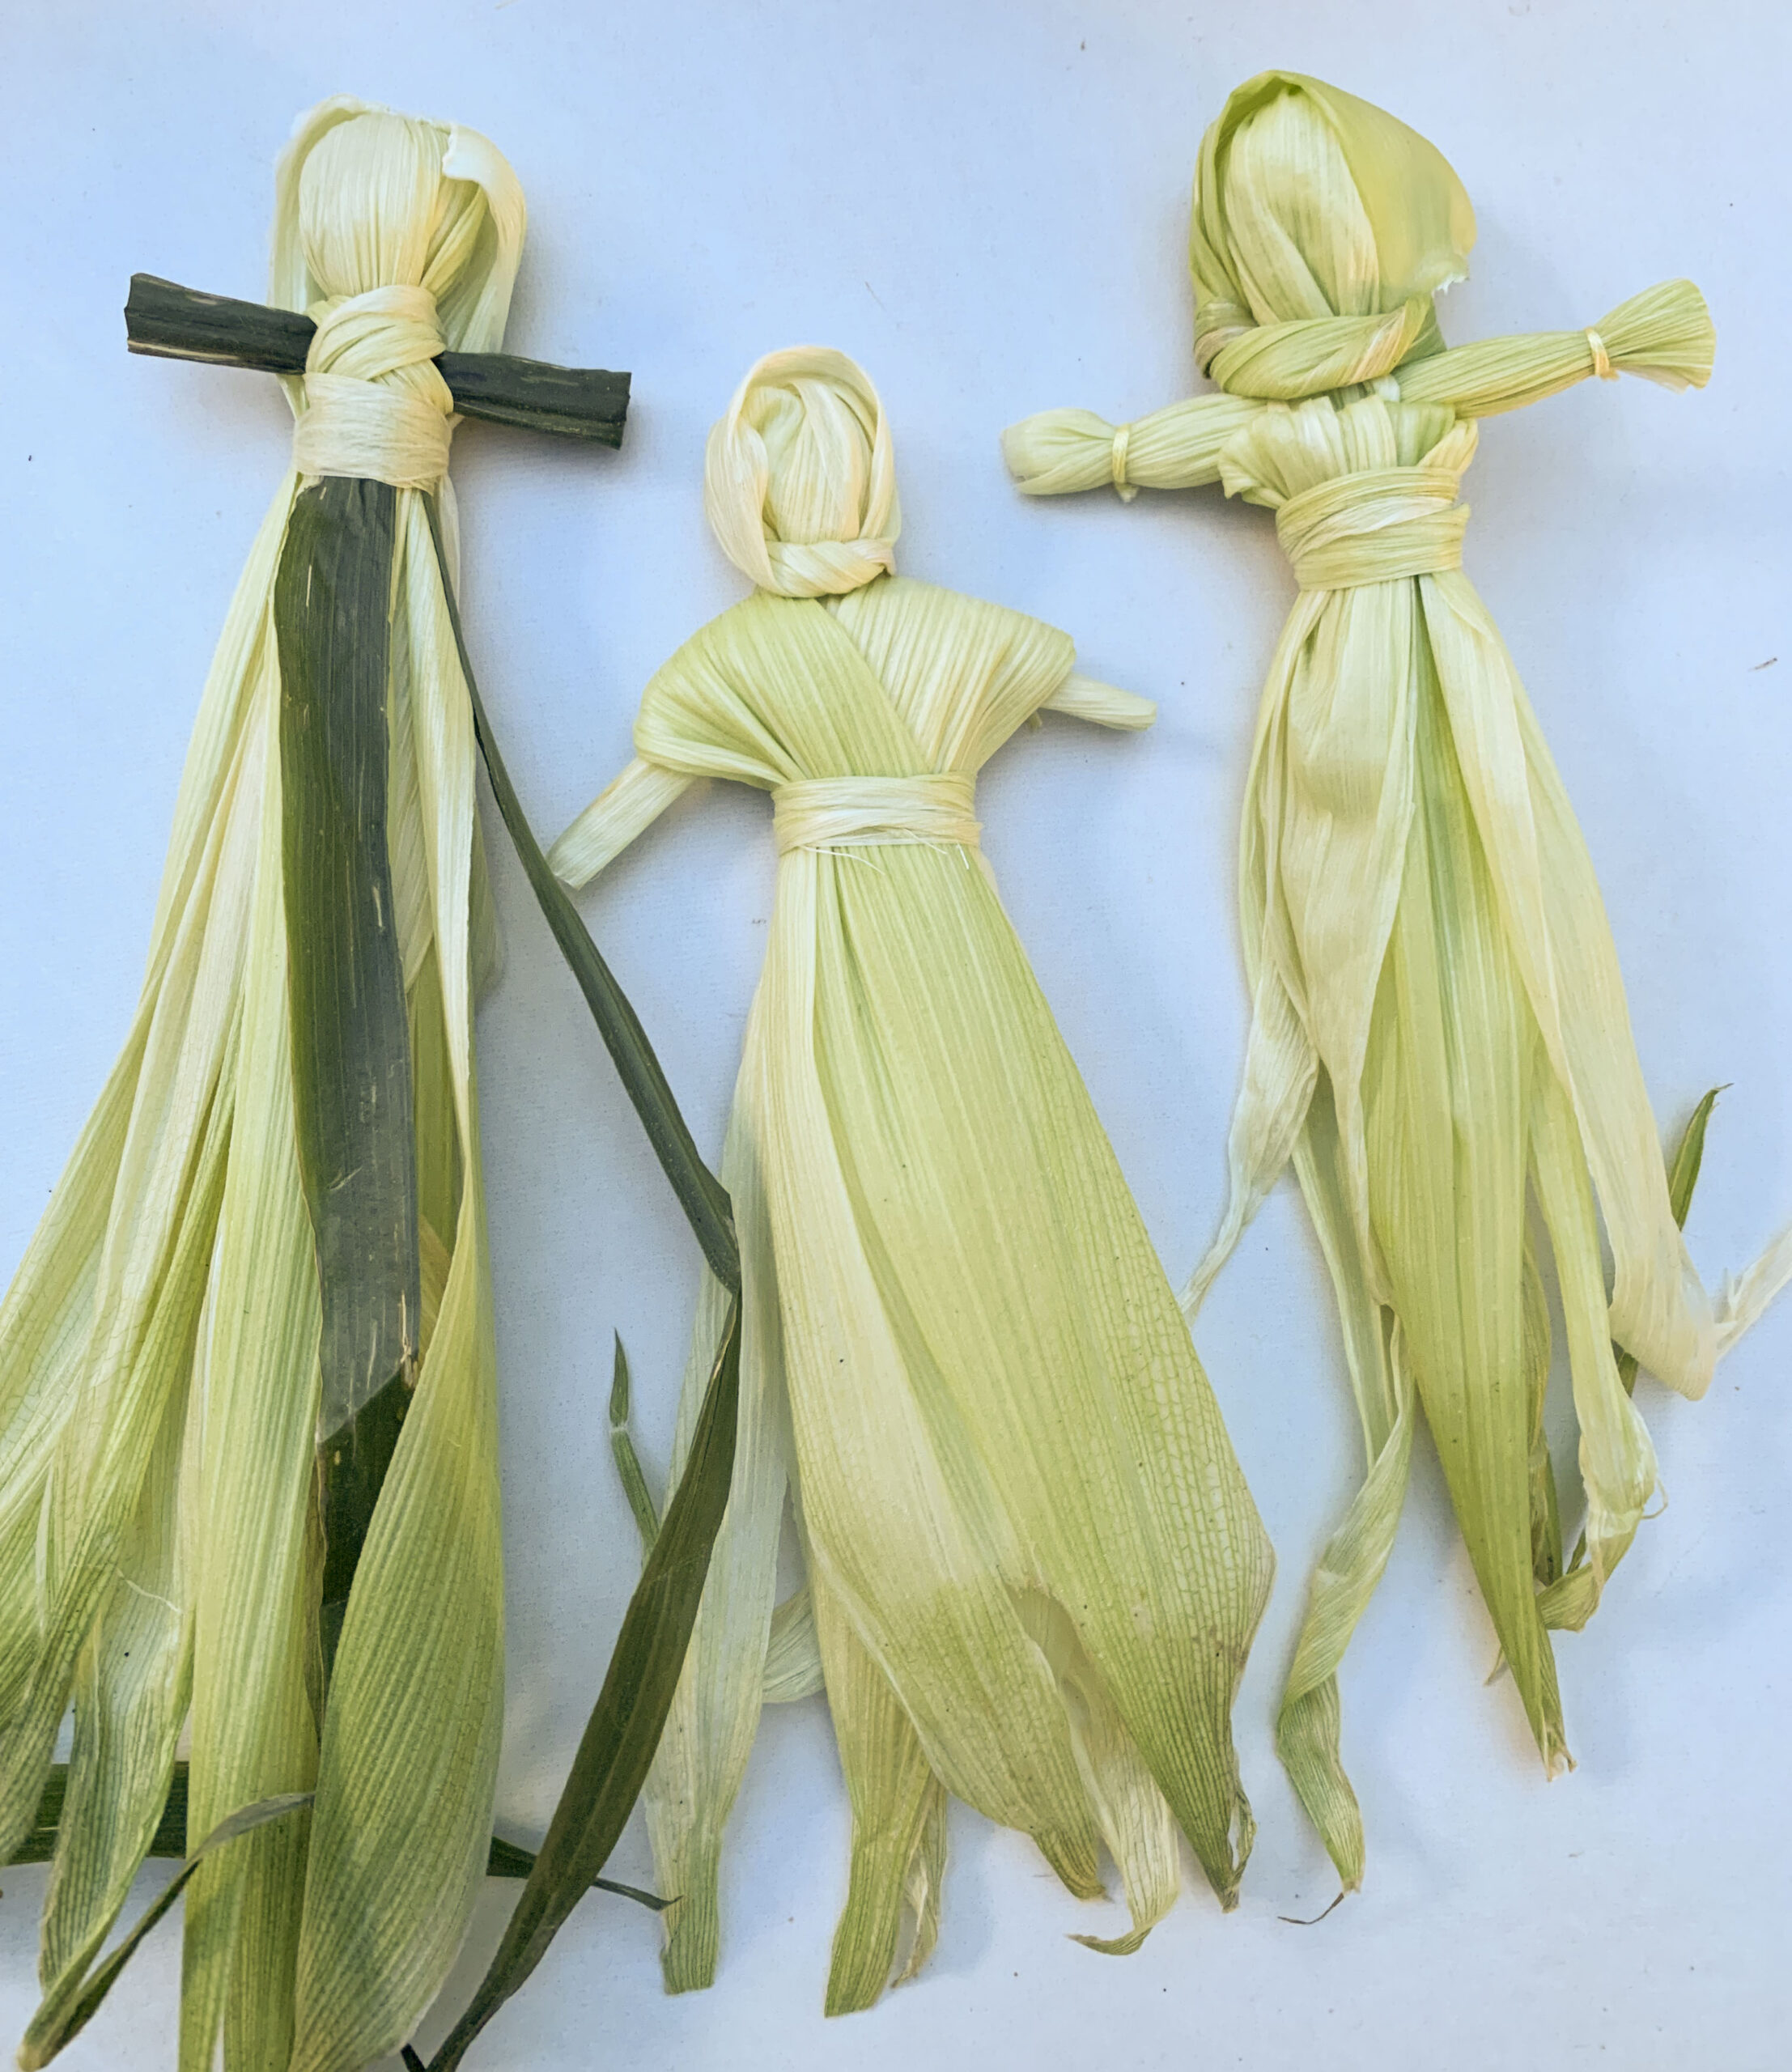 corn husk dolls